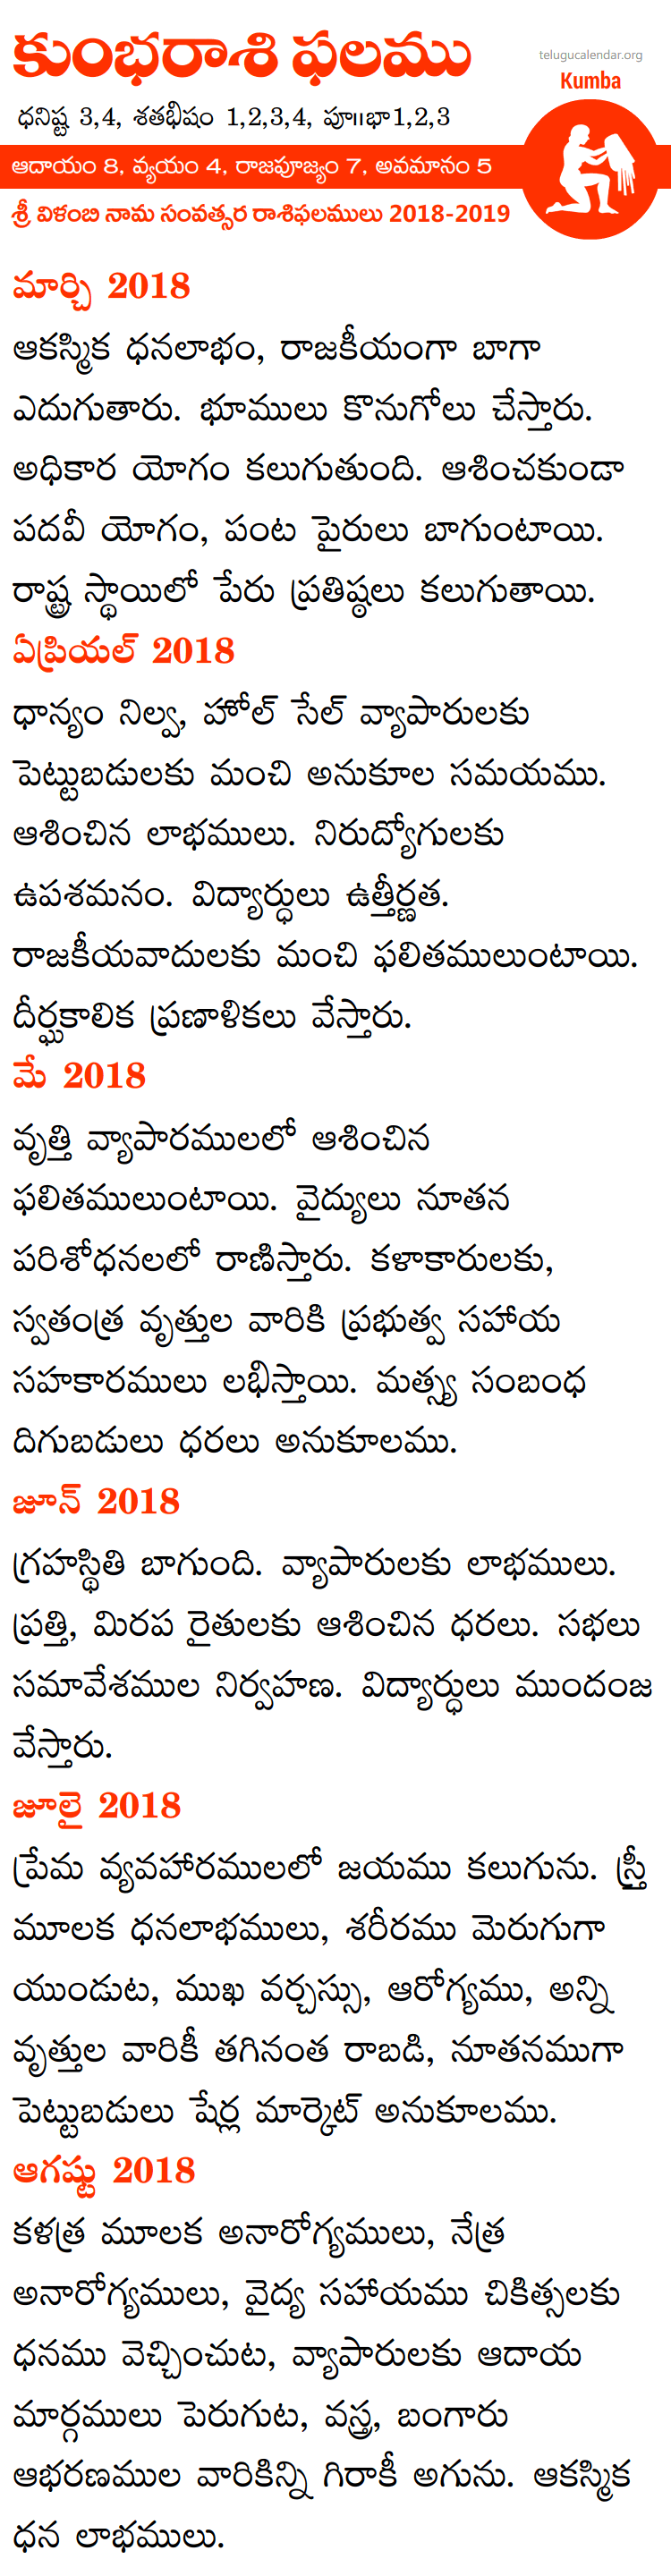 Kumba Rasi Phalalu 2018-2019 Telugu